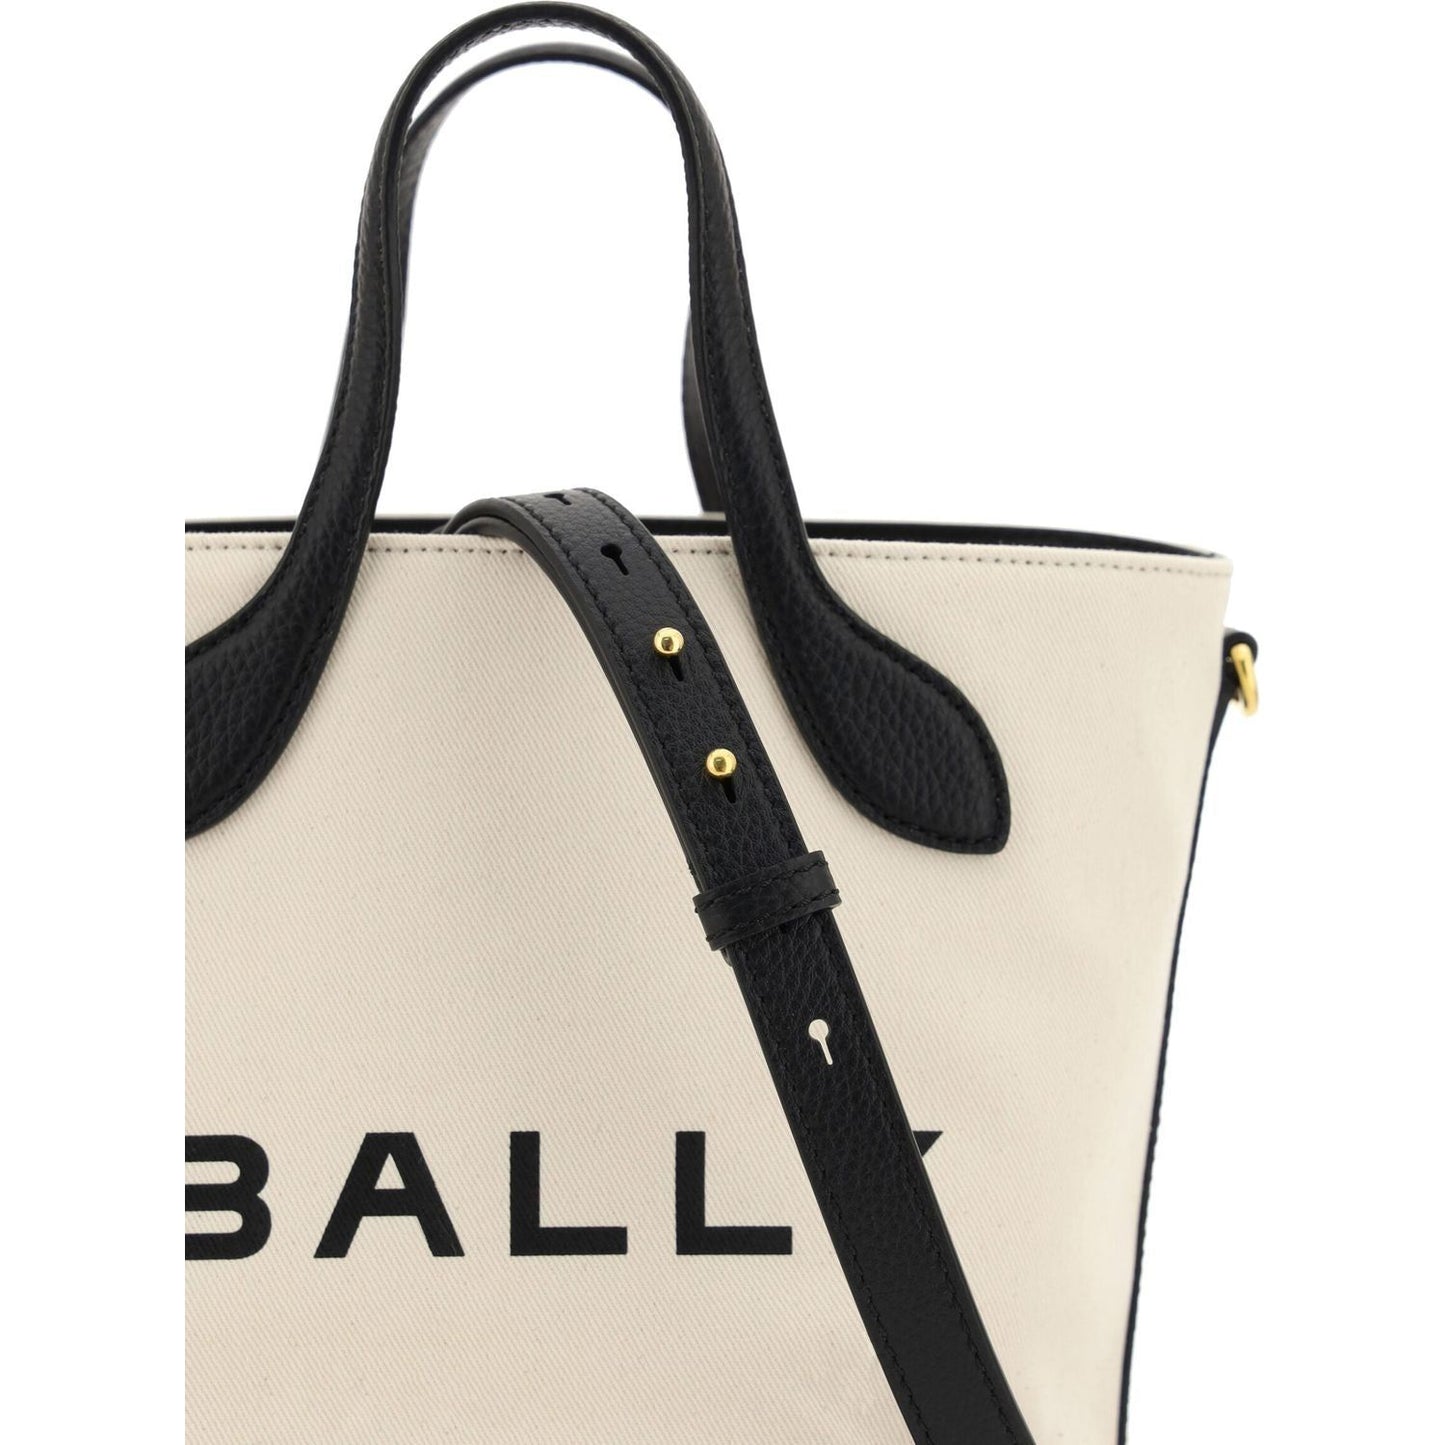 Bally Elegant Monogram Bucket Bag in Black & White white-and-black-leather-bucket-bag